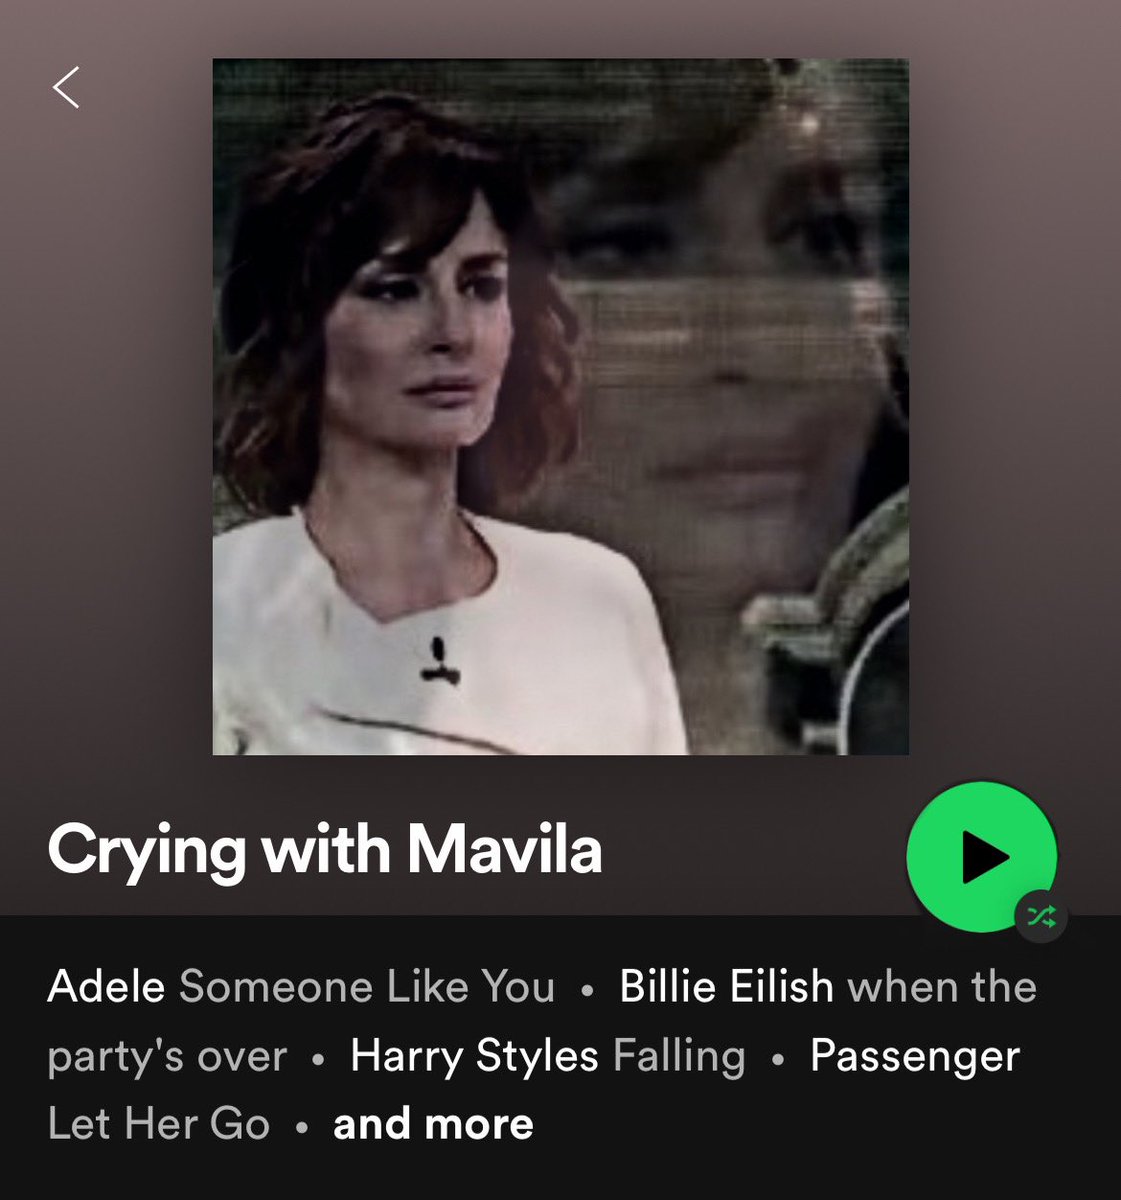 RT @zummmm_: Siri play crying with Mavila. https://t.co/y9uHavaKau